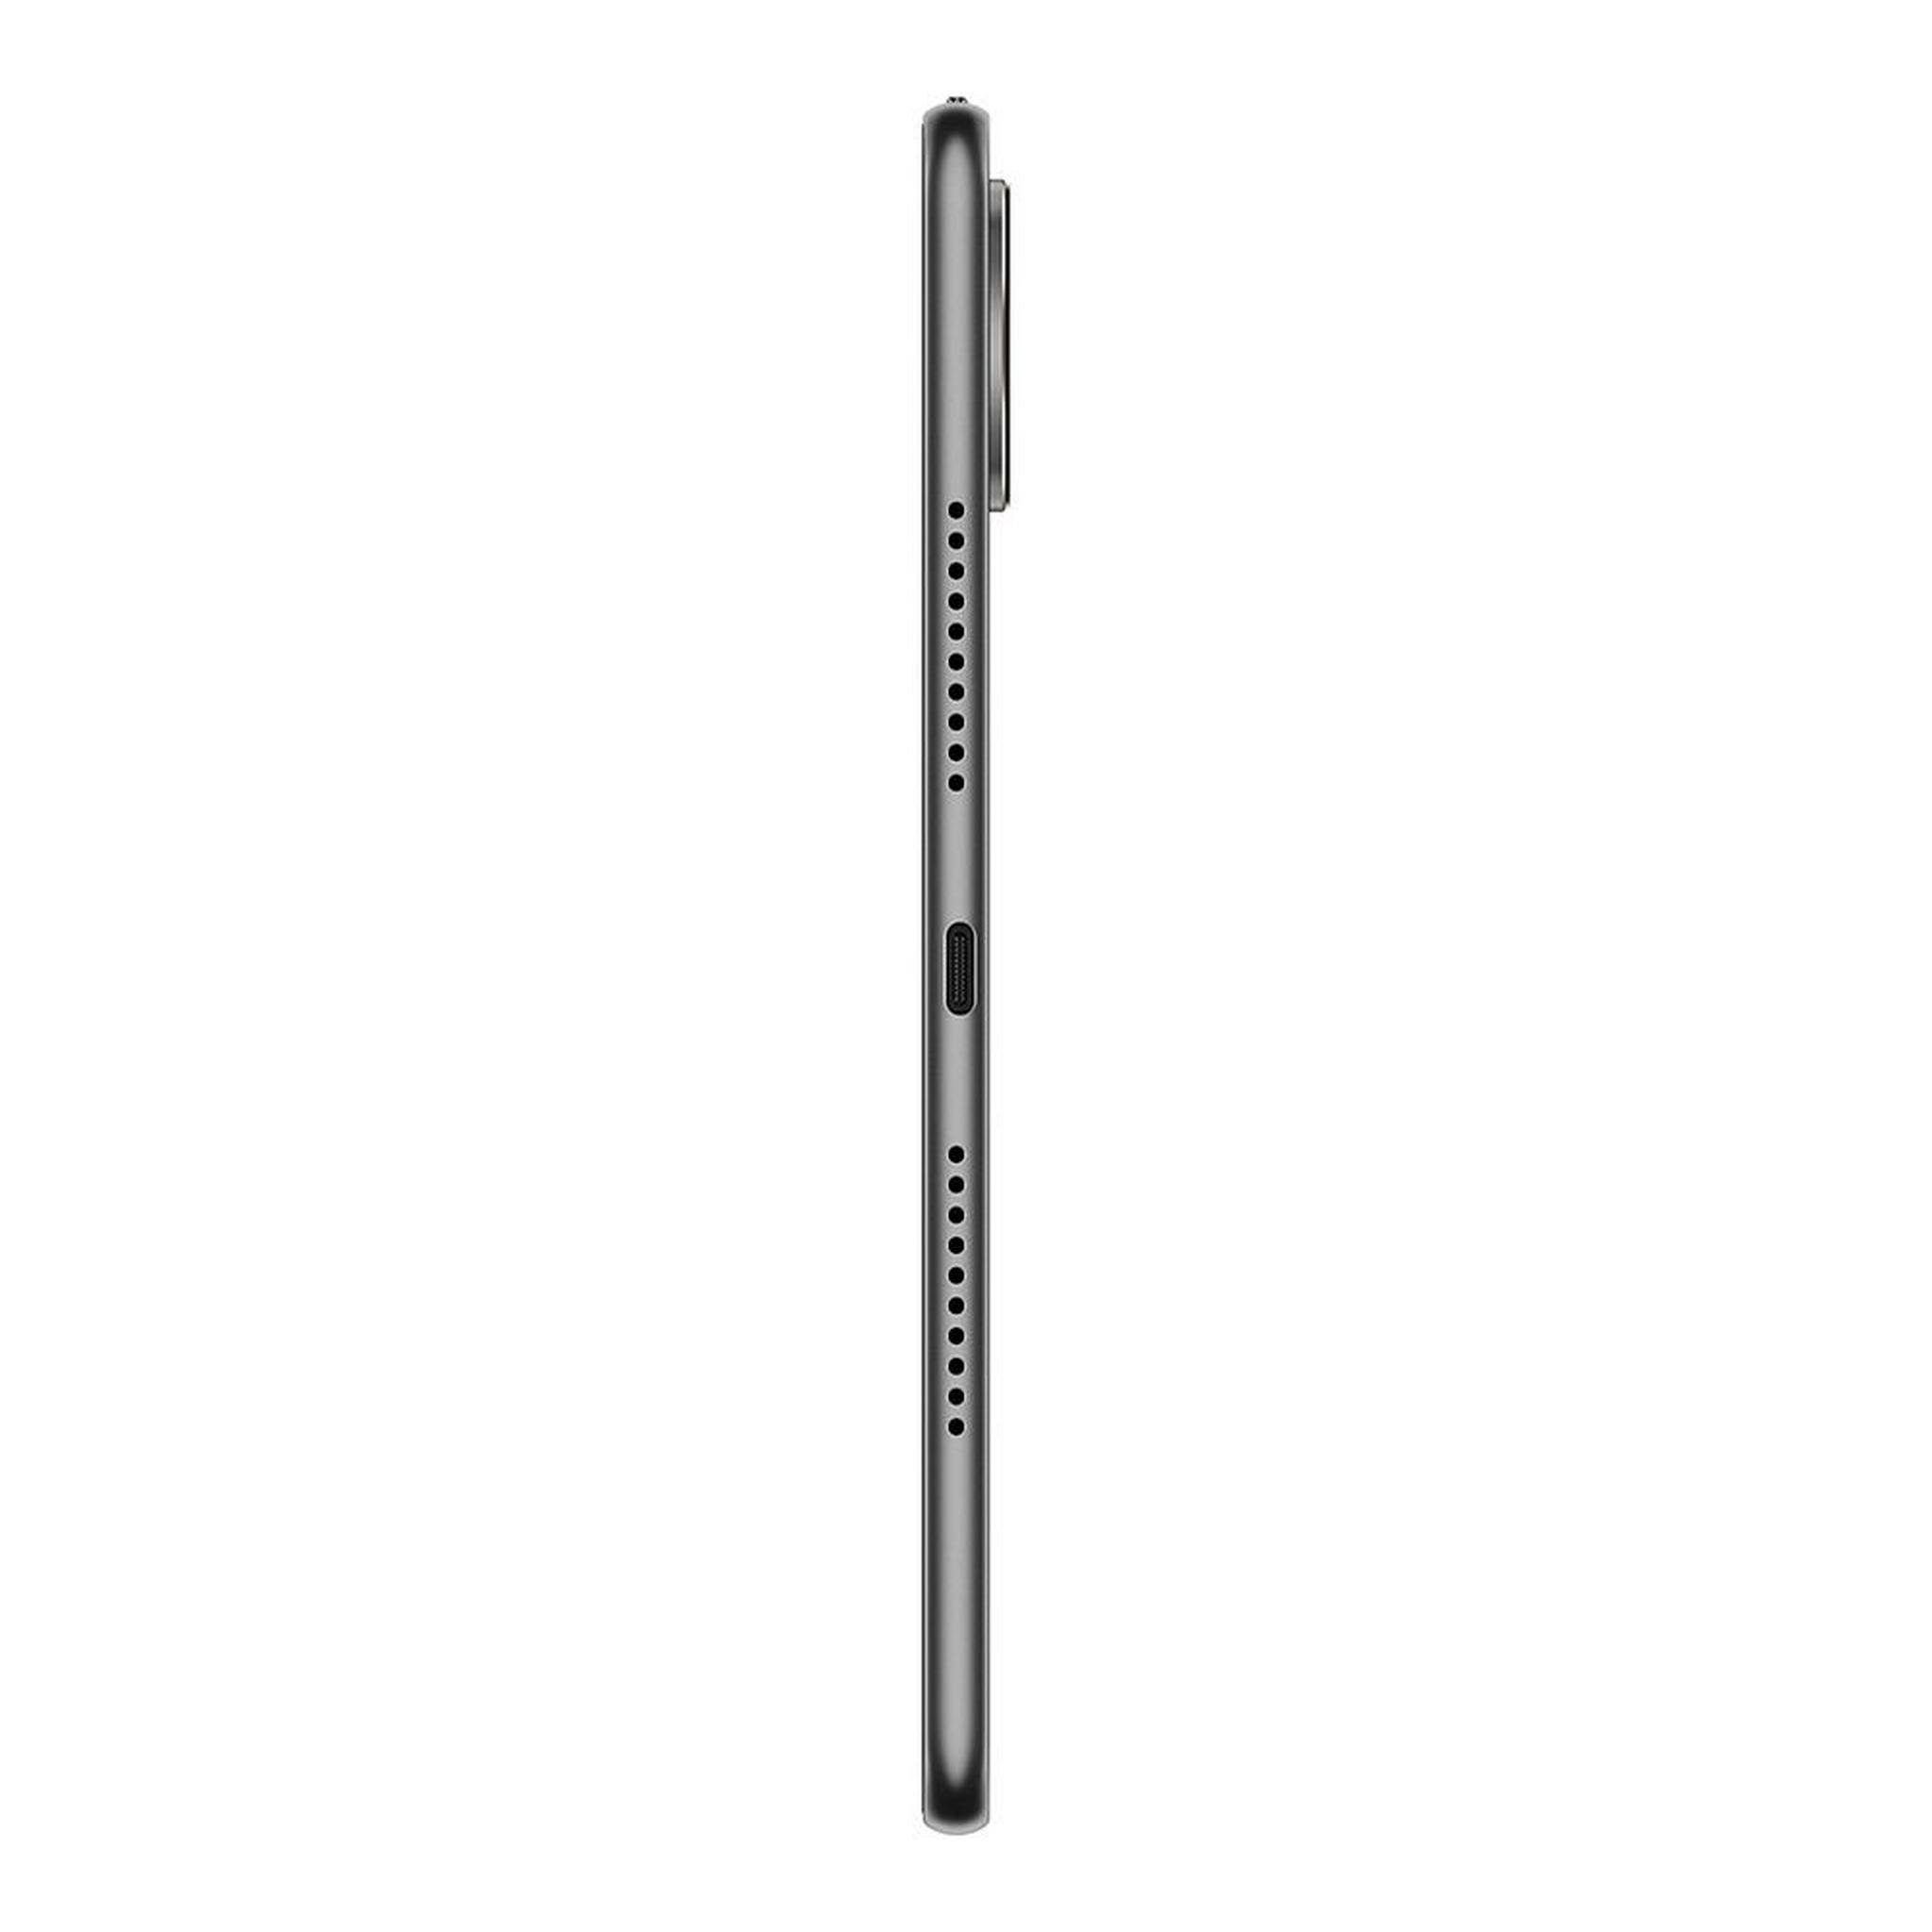 Huawei MatePad Pro 11 256GB Wi-Fi, 11-inch Tablet - Black